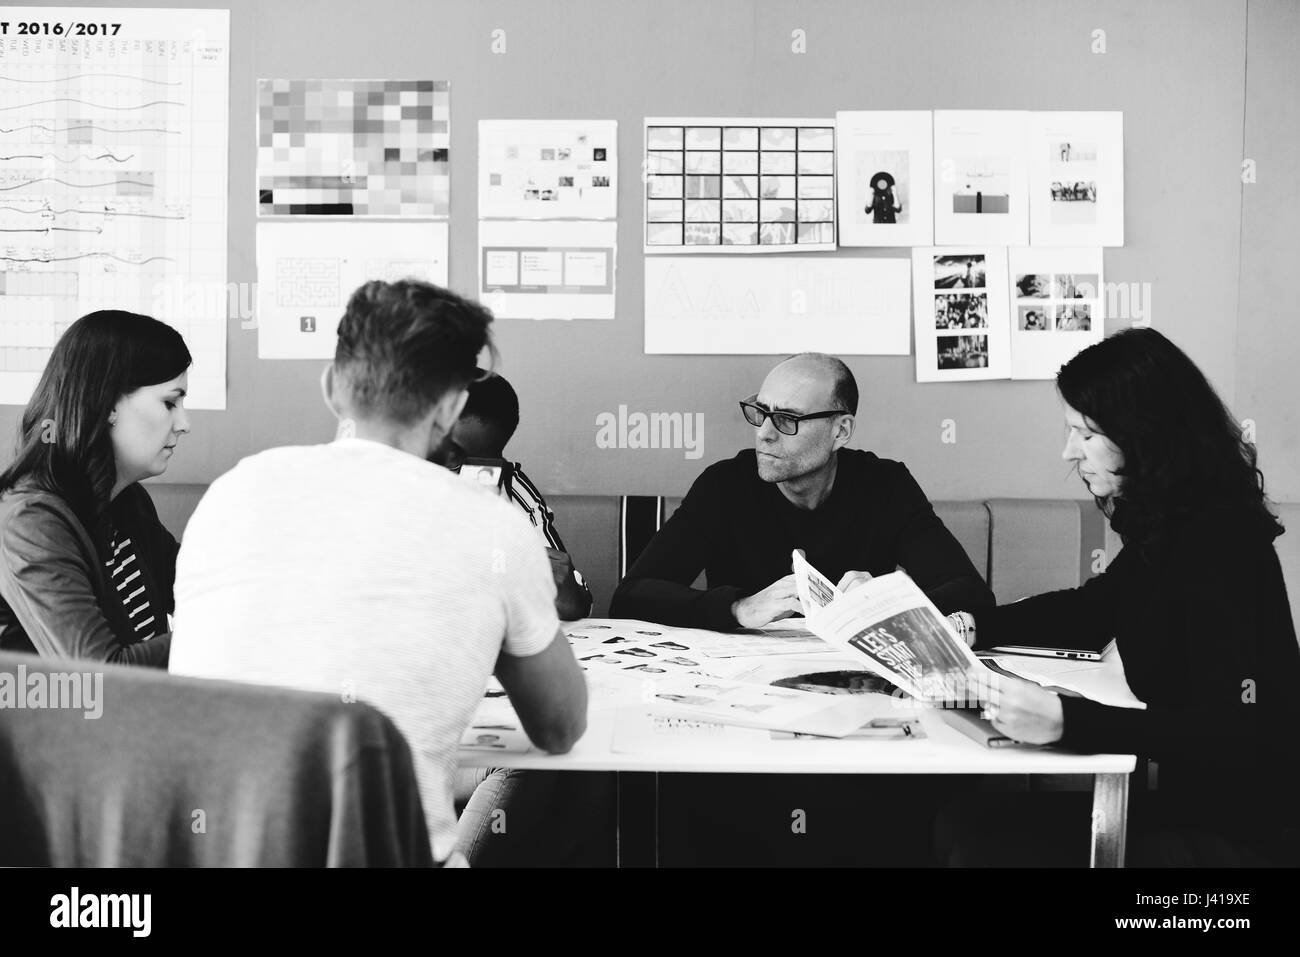 Startup Business Team Brainstorming on  Meeting Workshop Stock Photo